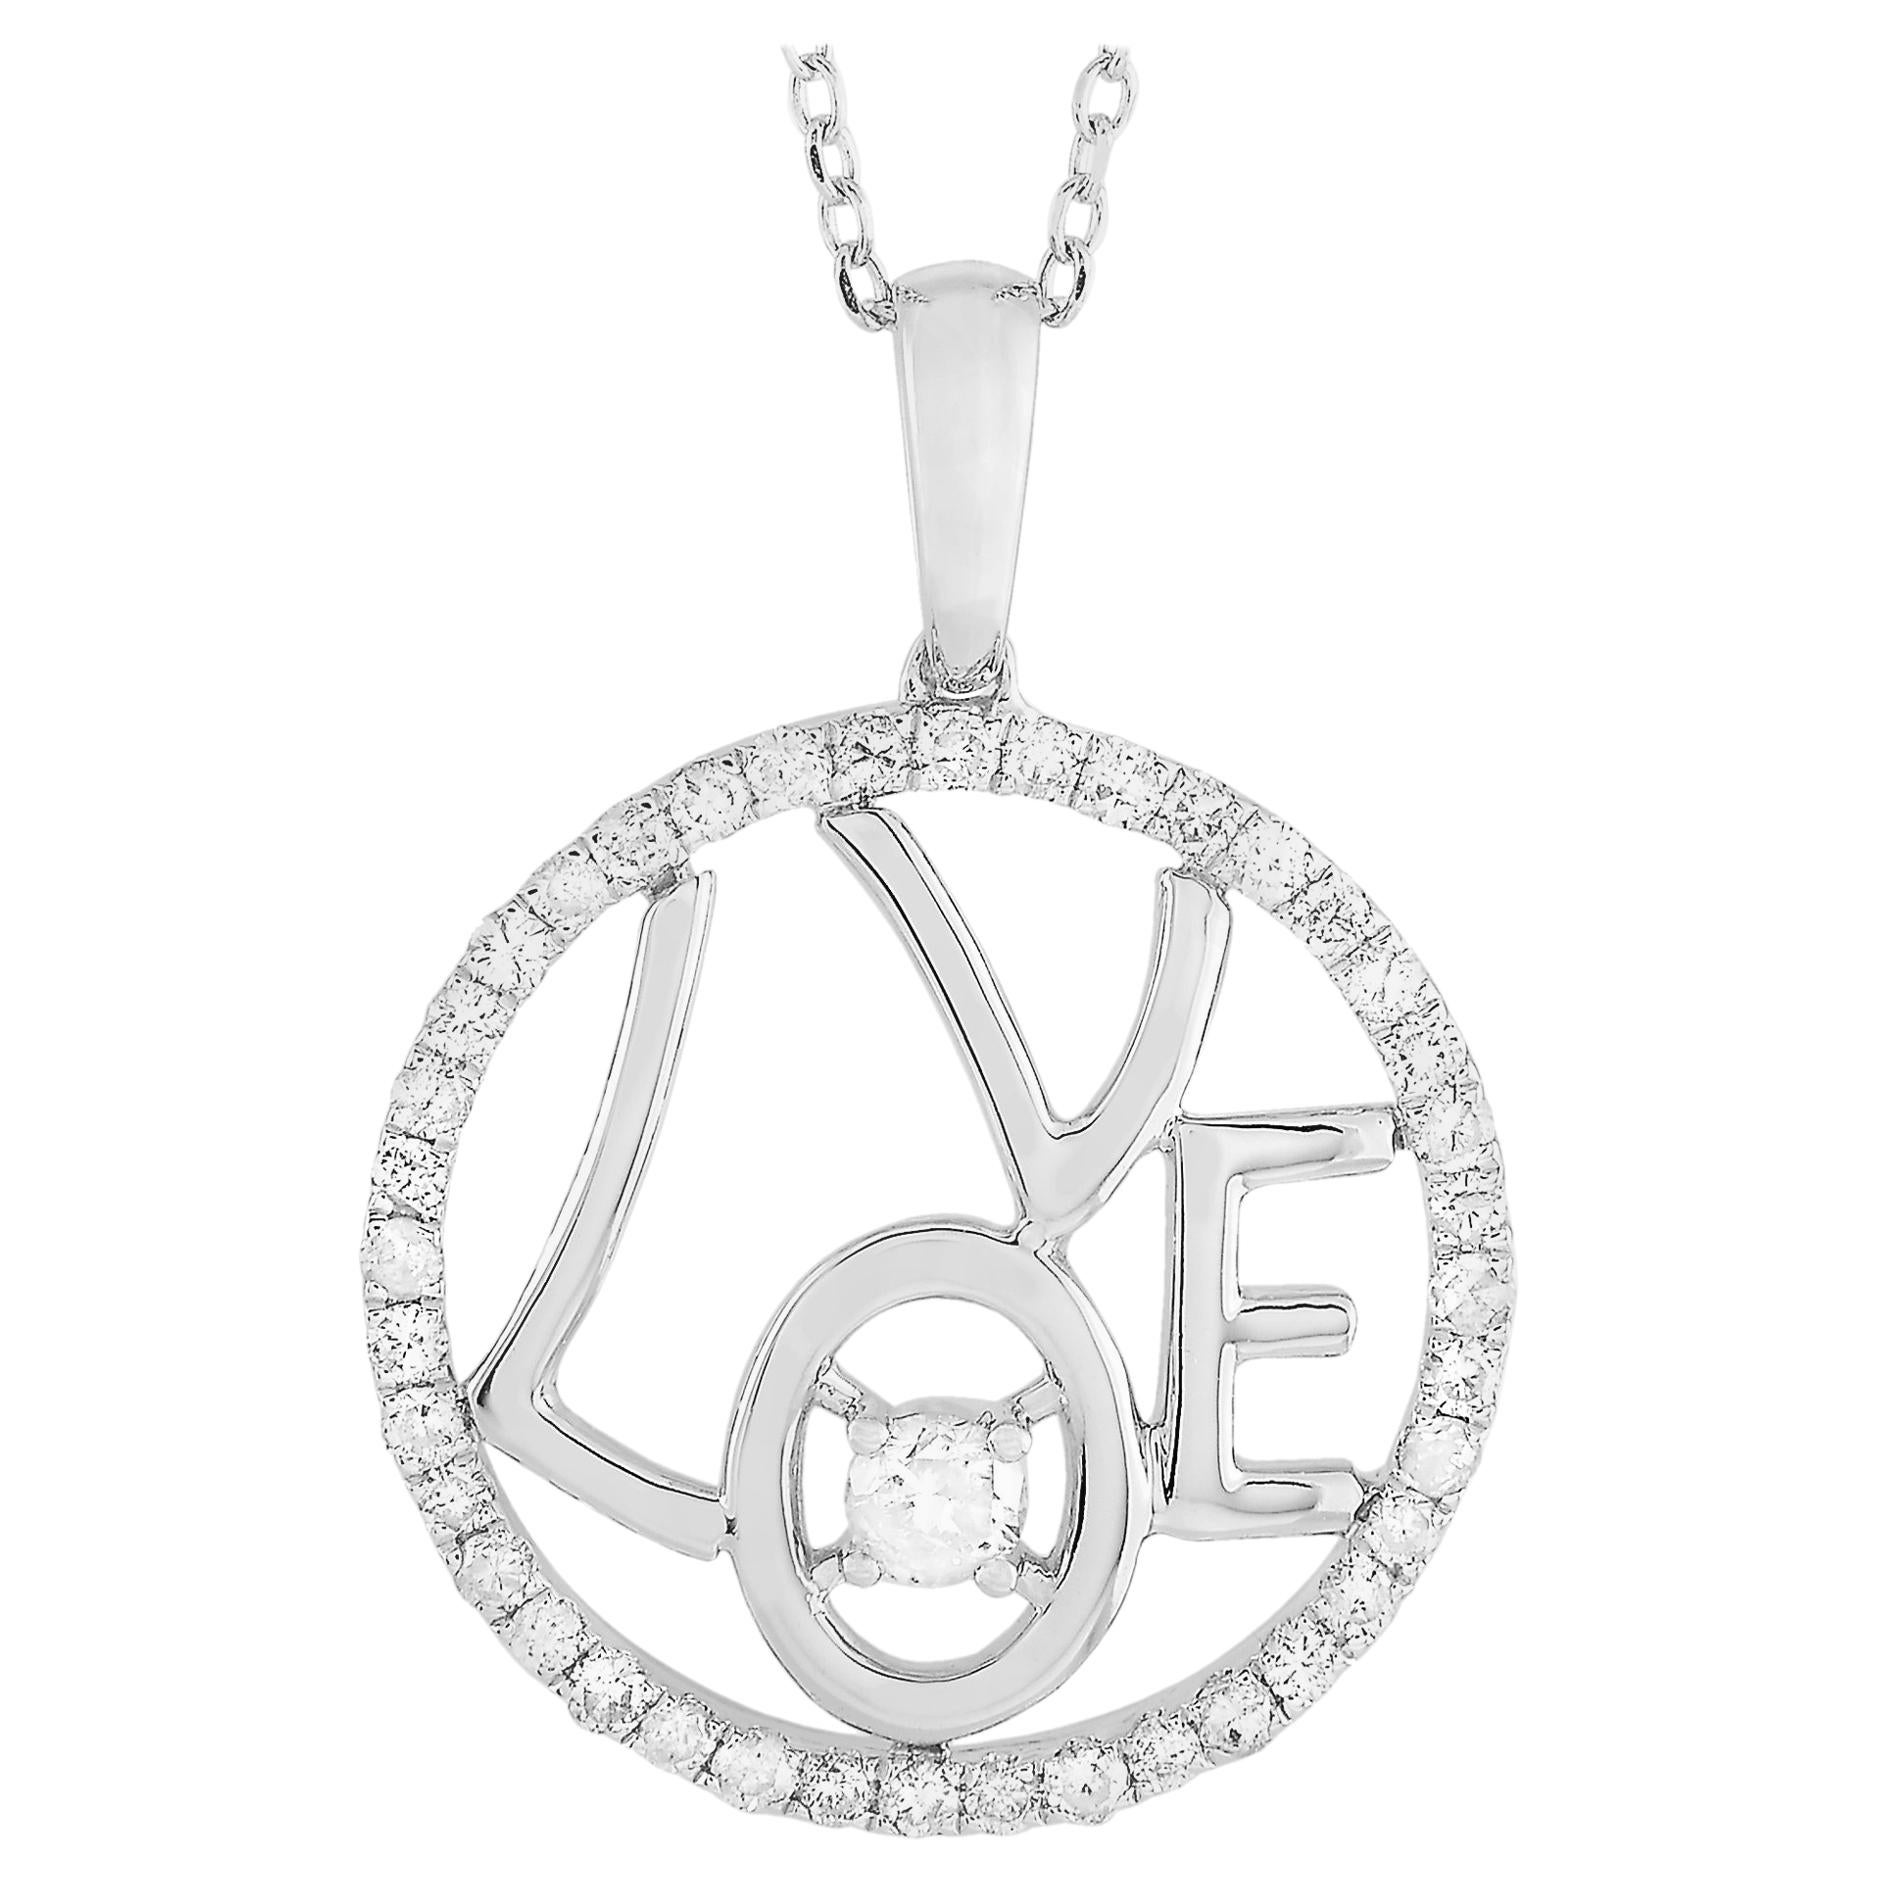 LB Exclusive Collier pendentif en or blanc 14 carats avec diamants de 0,30 carat